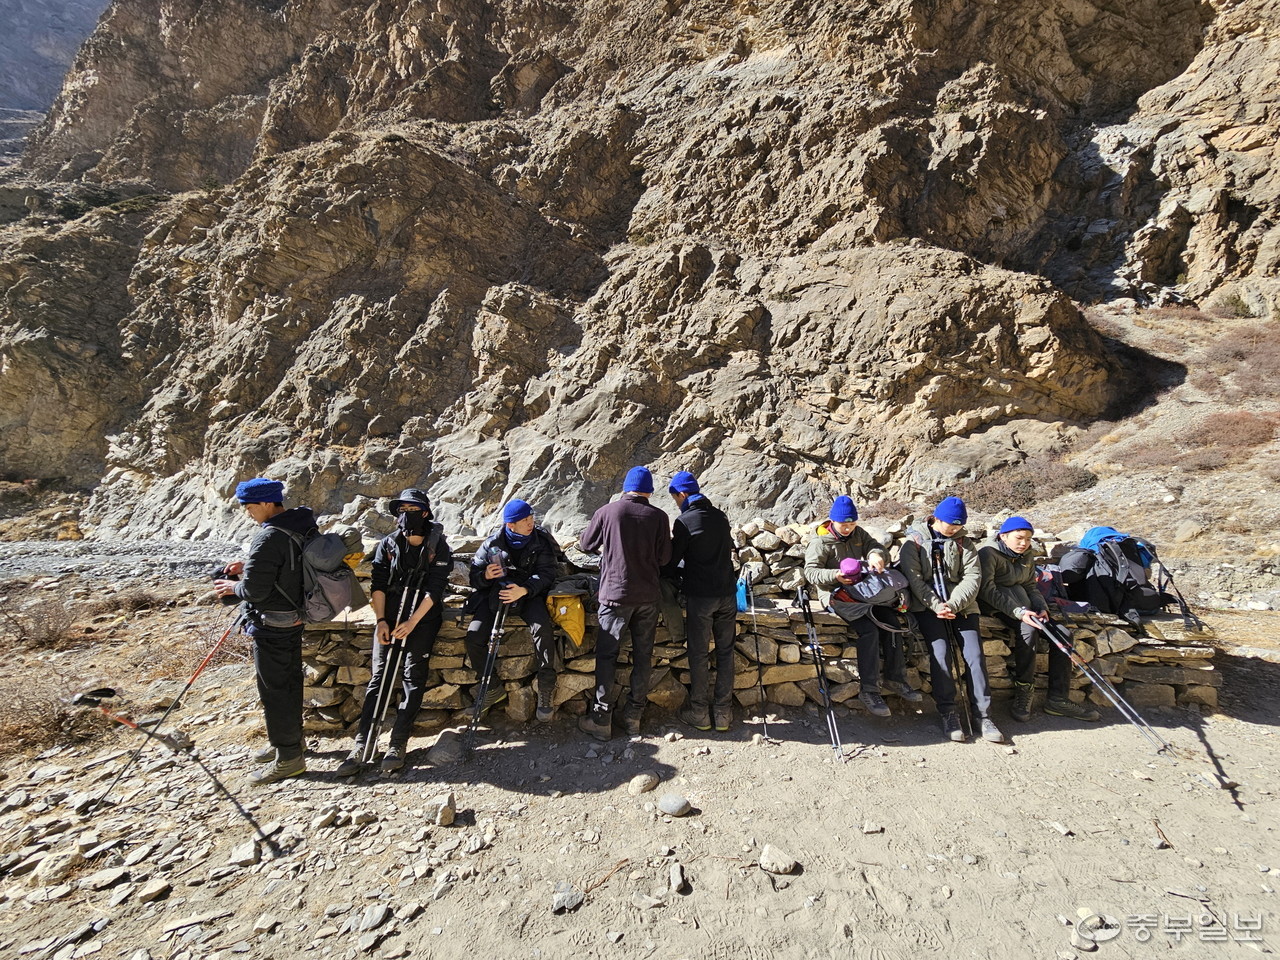 2023 Expedition East of Annapurna 대원들이 트레킹 중 물과 간식을 먹으며 휴식을 취하고 있다. 사진=김종화기자